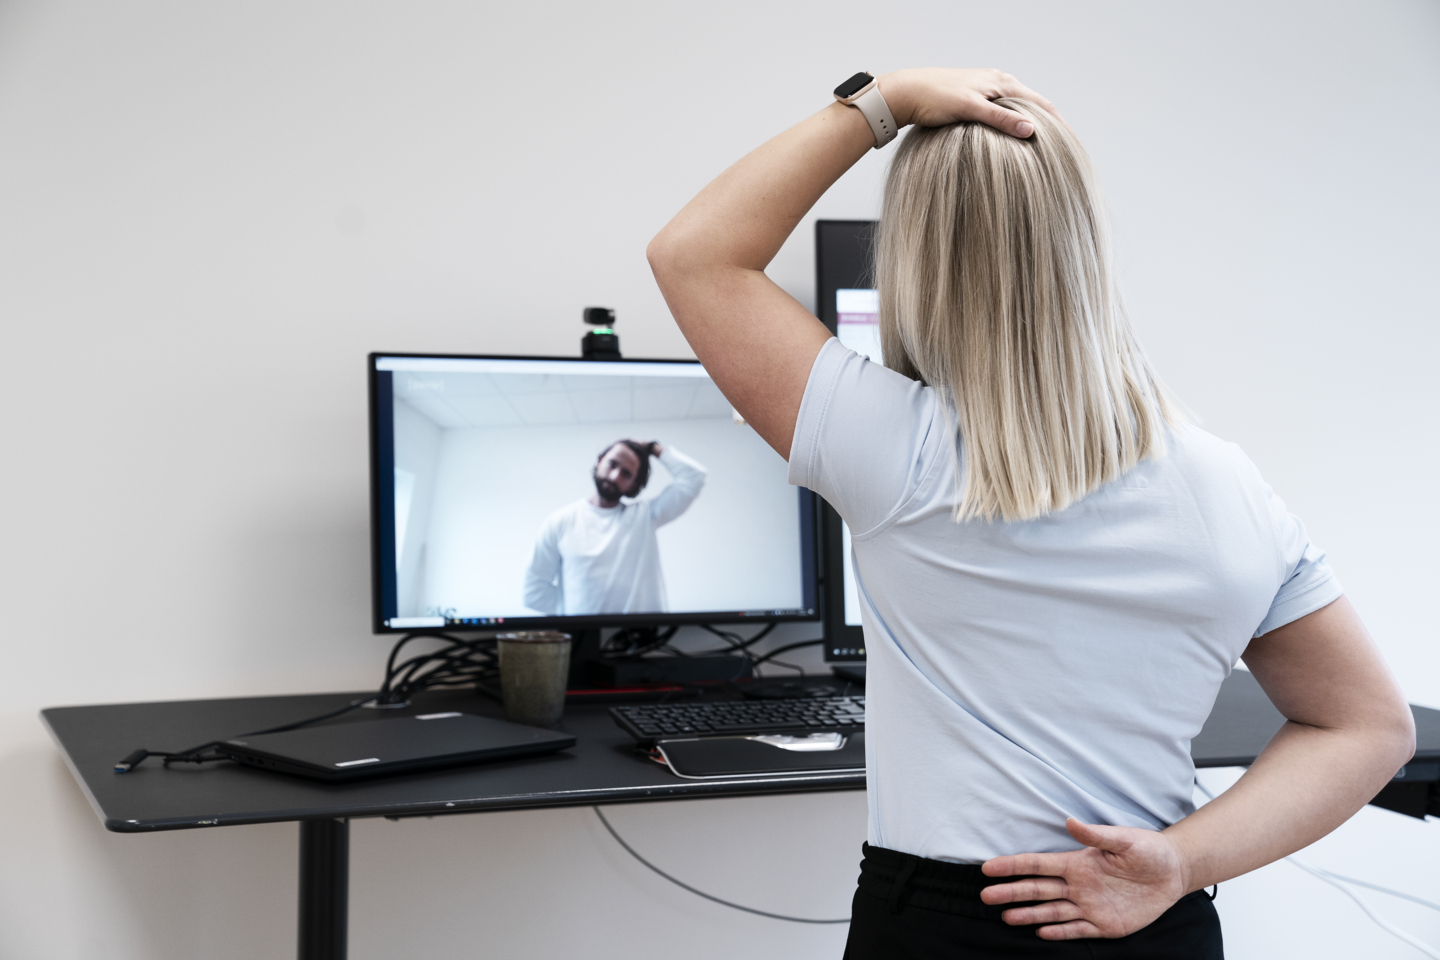 Online Fysioterapeut viser øvelse